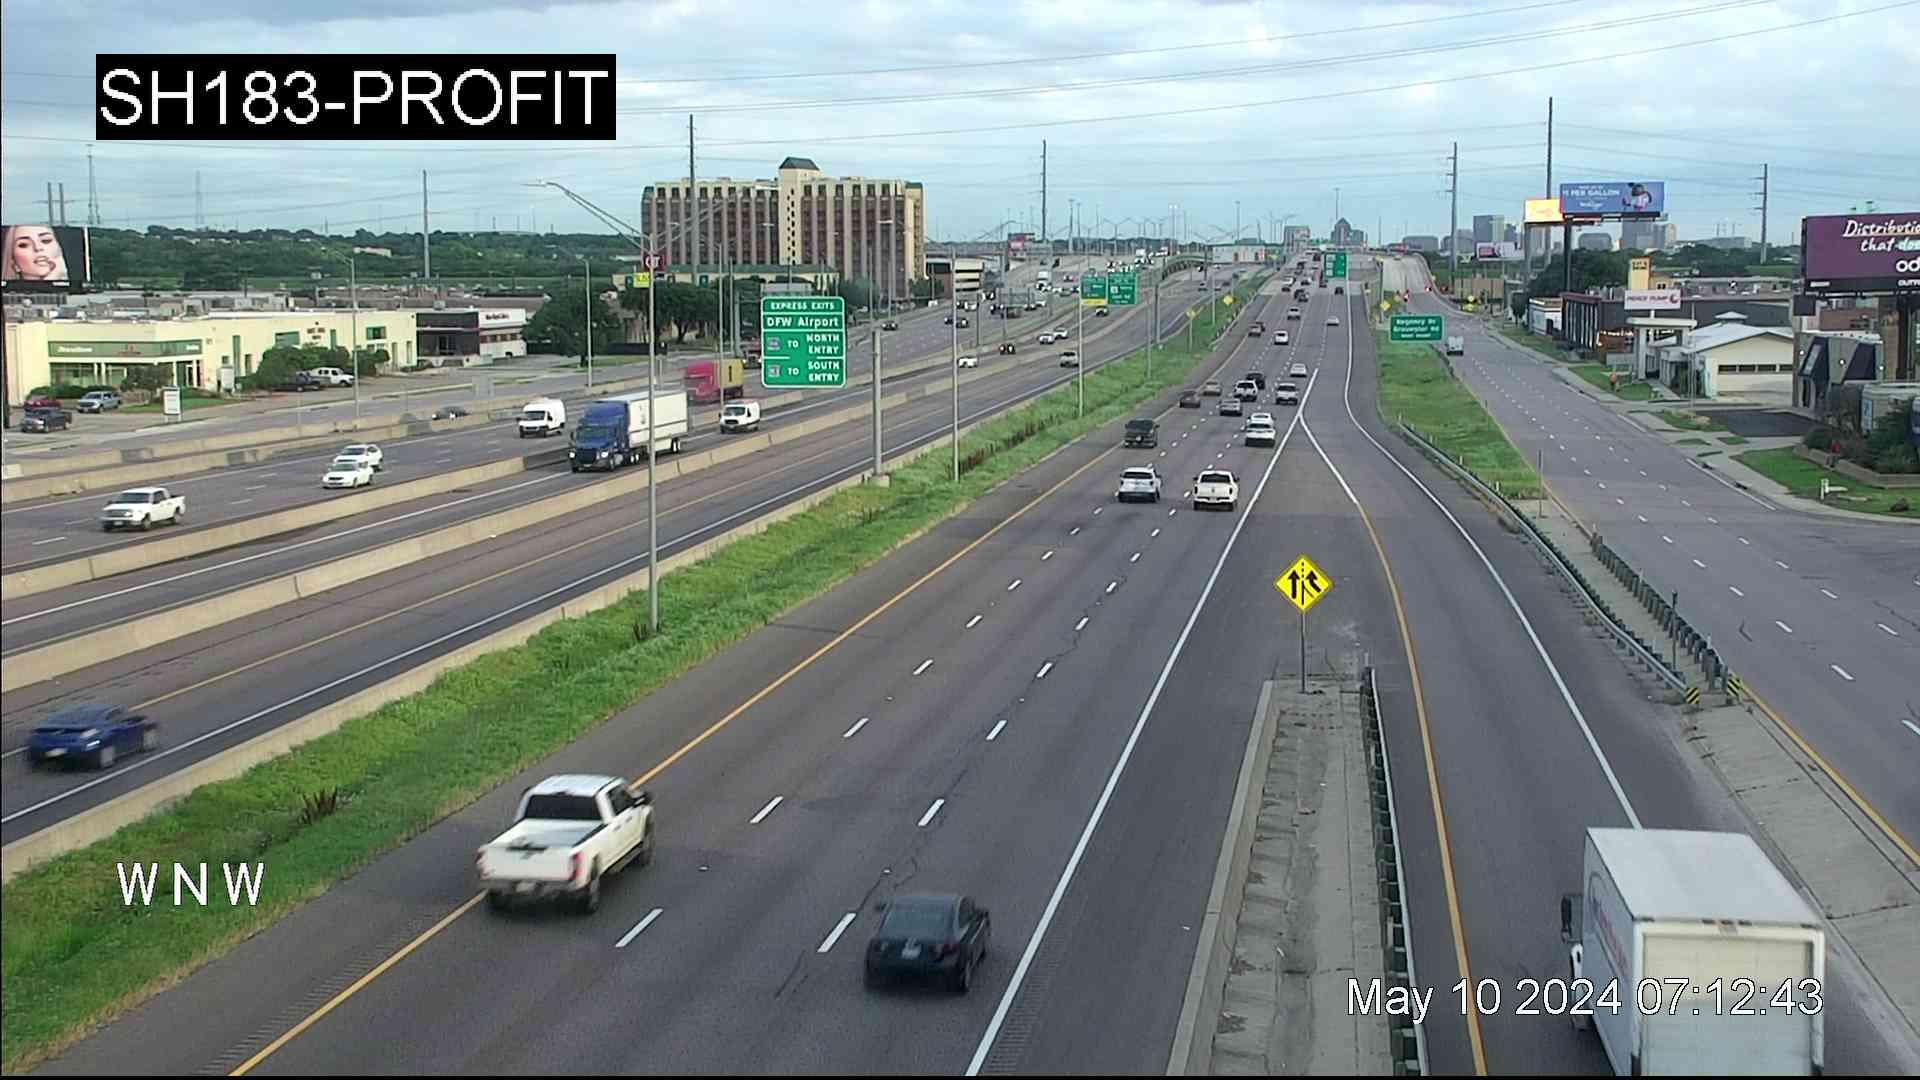 Dallas › East: SH 183 @ Profit Traffic Camera